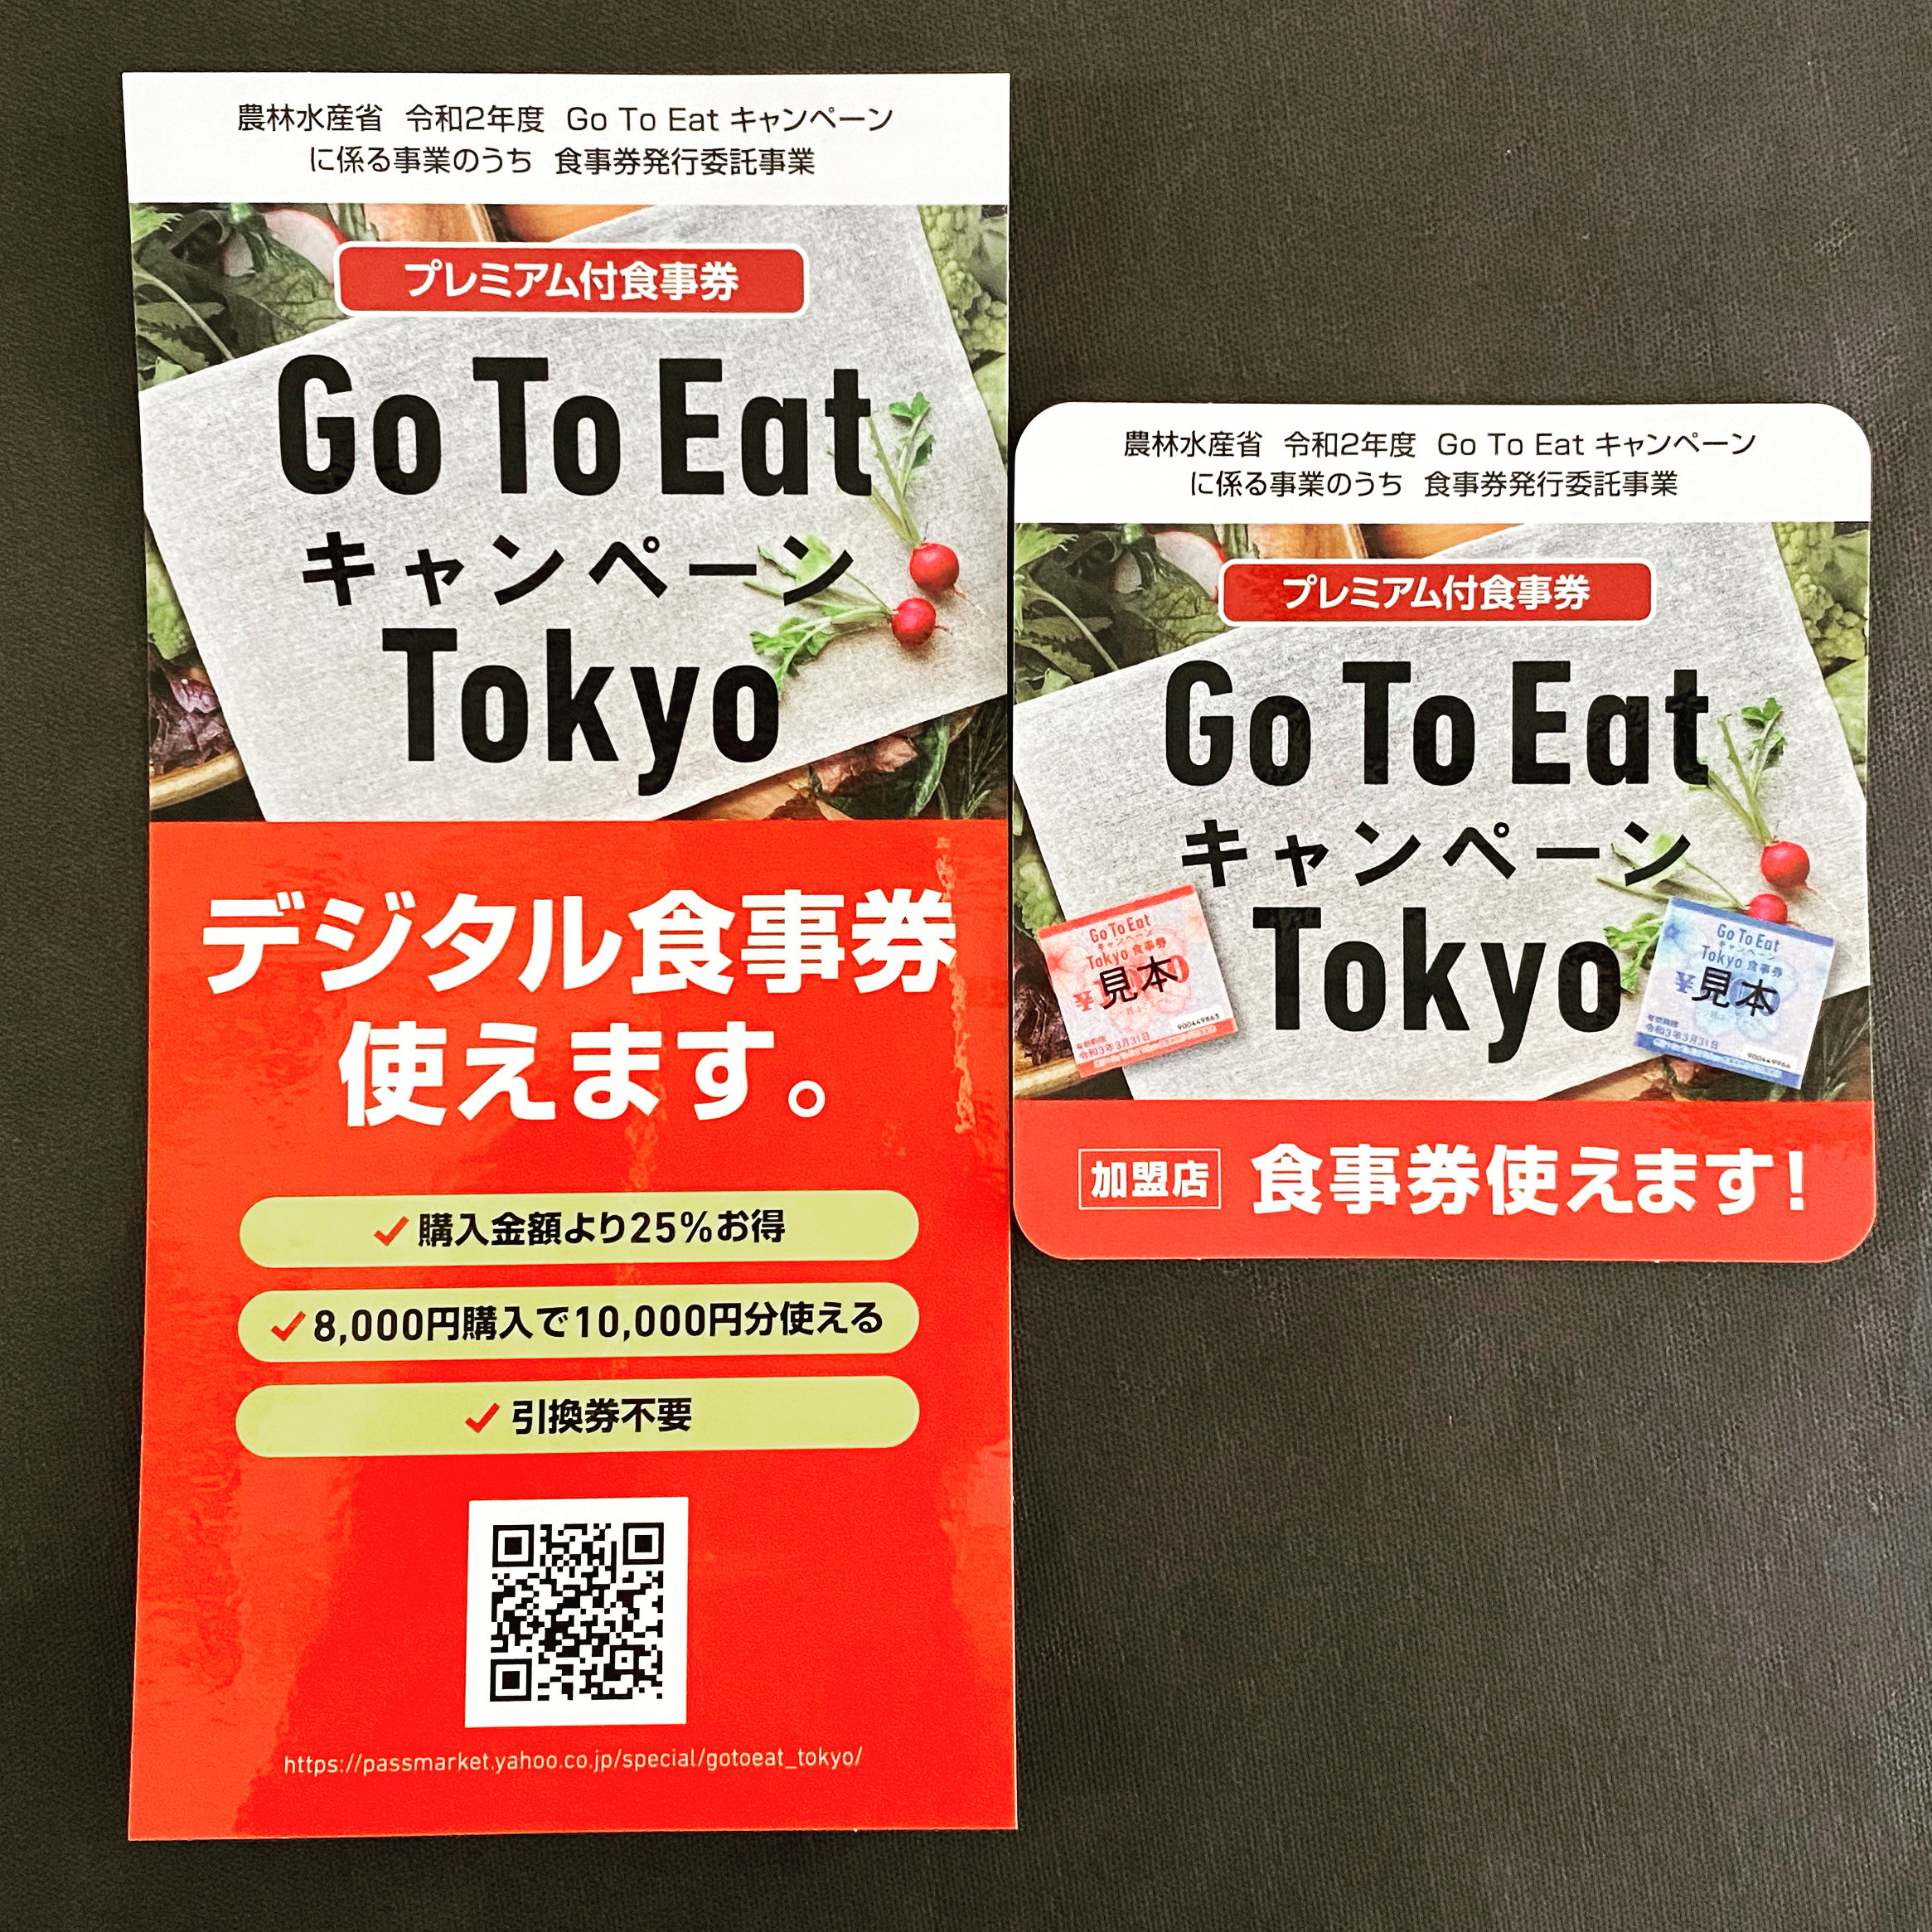 Go To Eat Tokyoプレミアム付き食事券